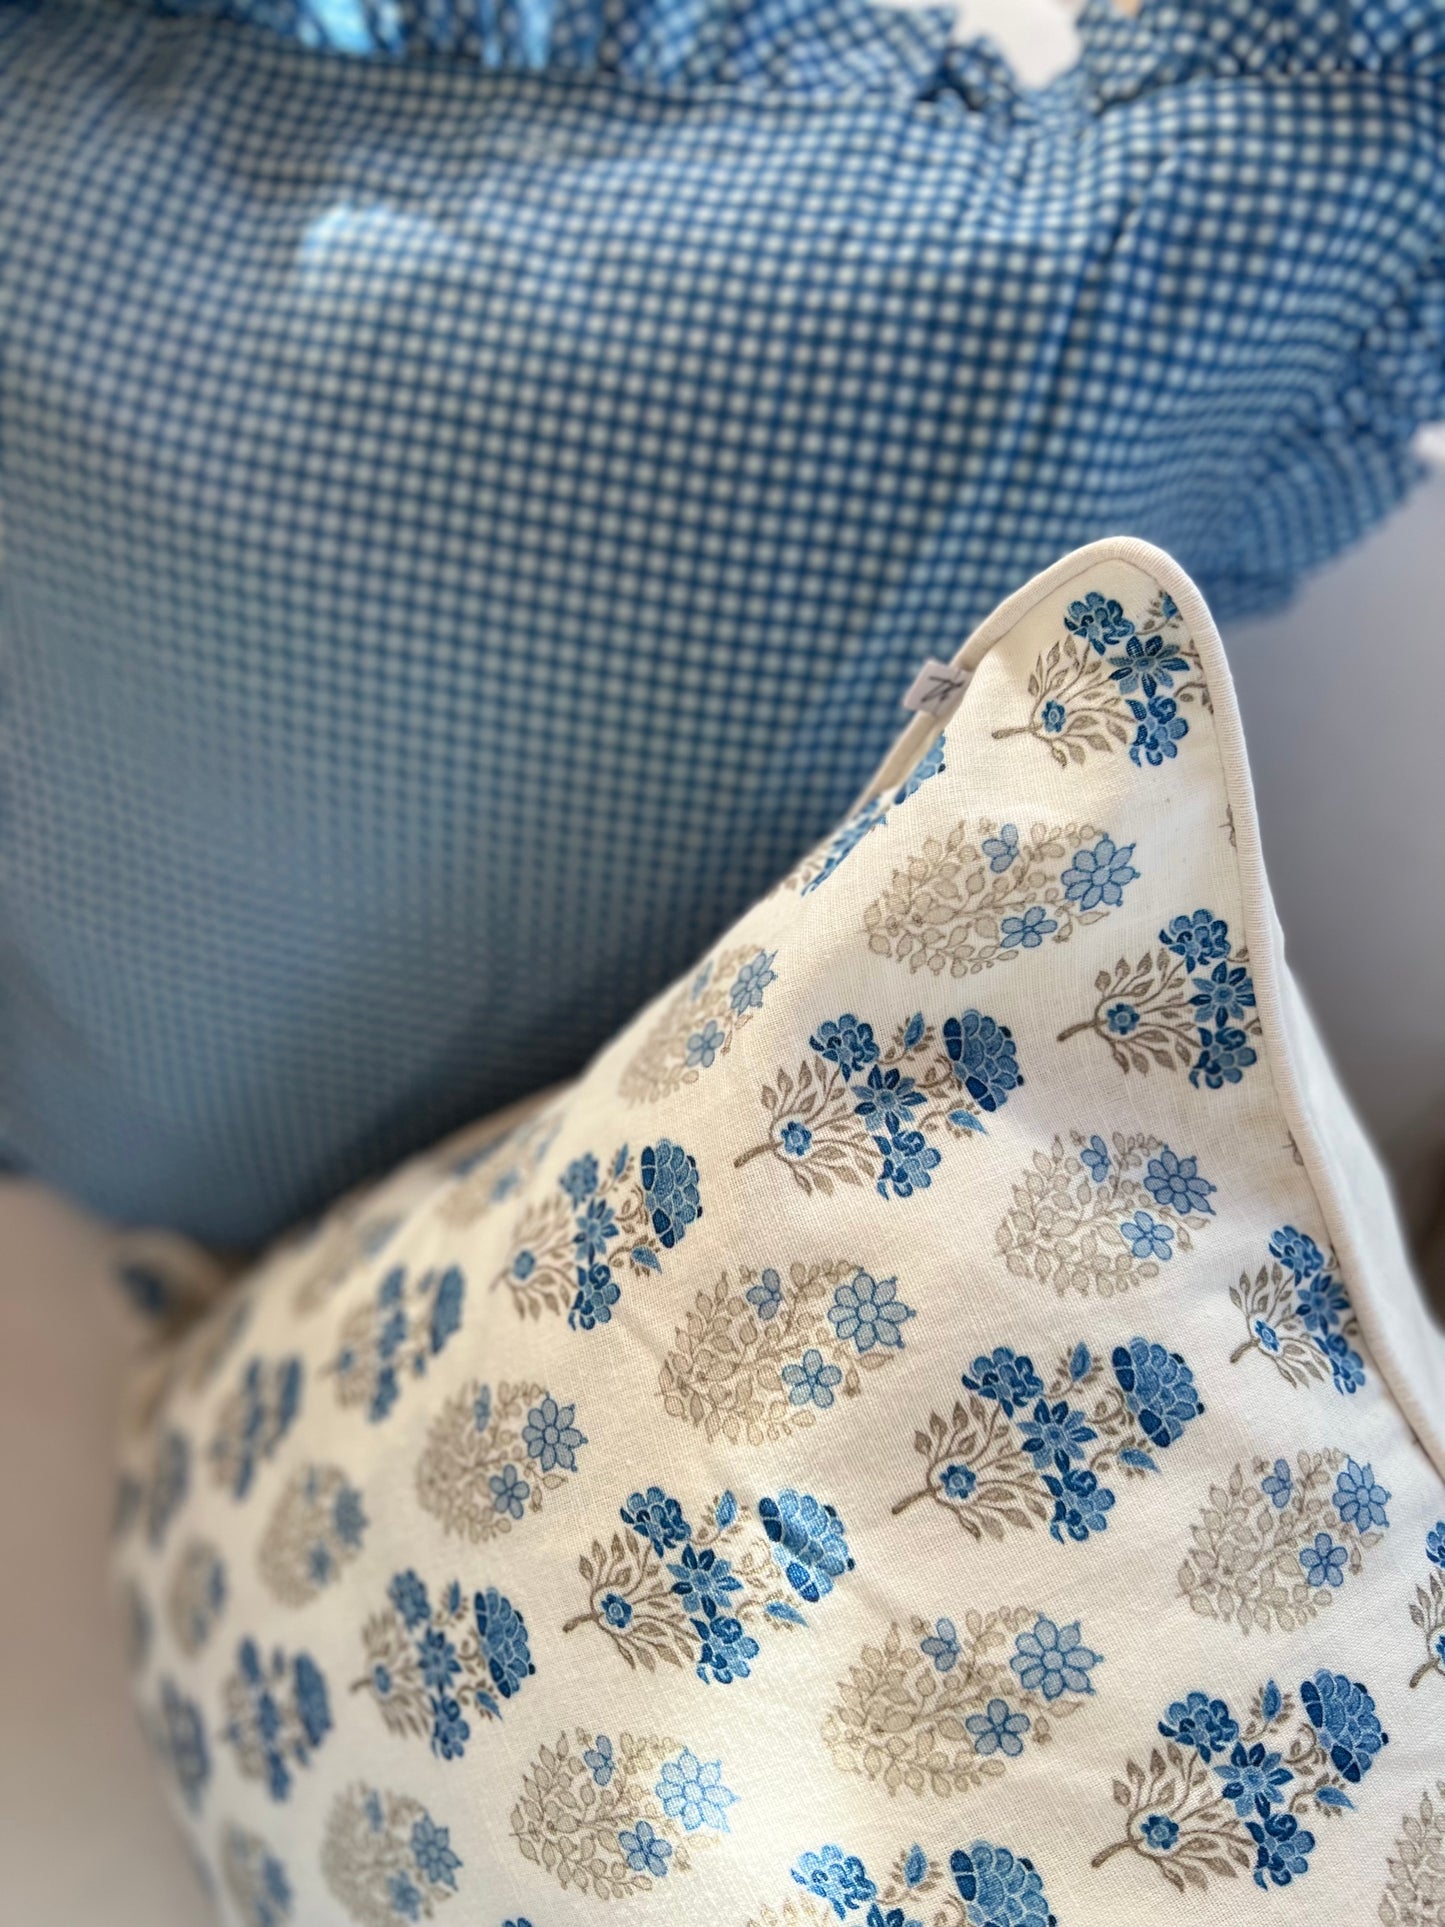 Savannah Micro Gingham Pillow Cover in Blue